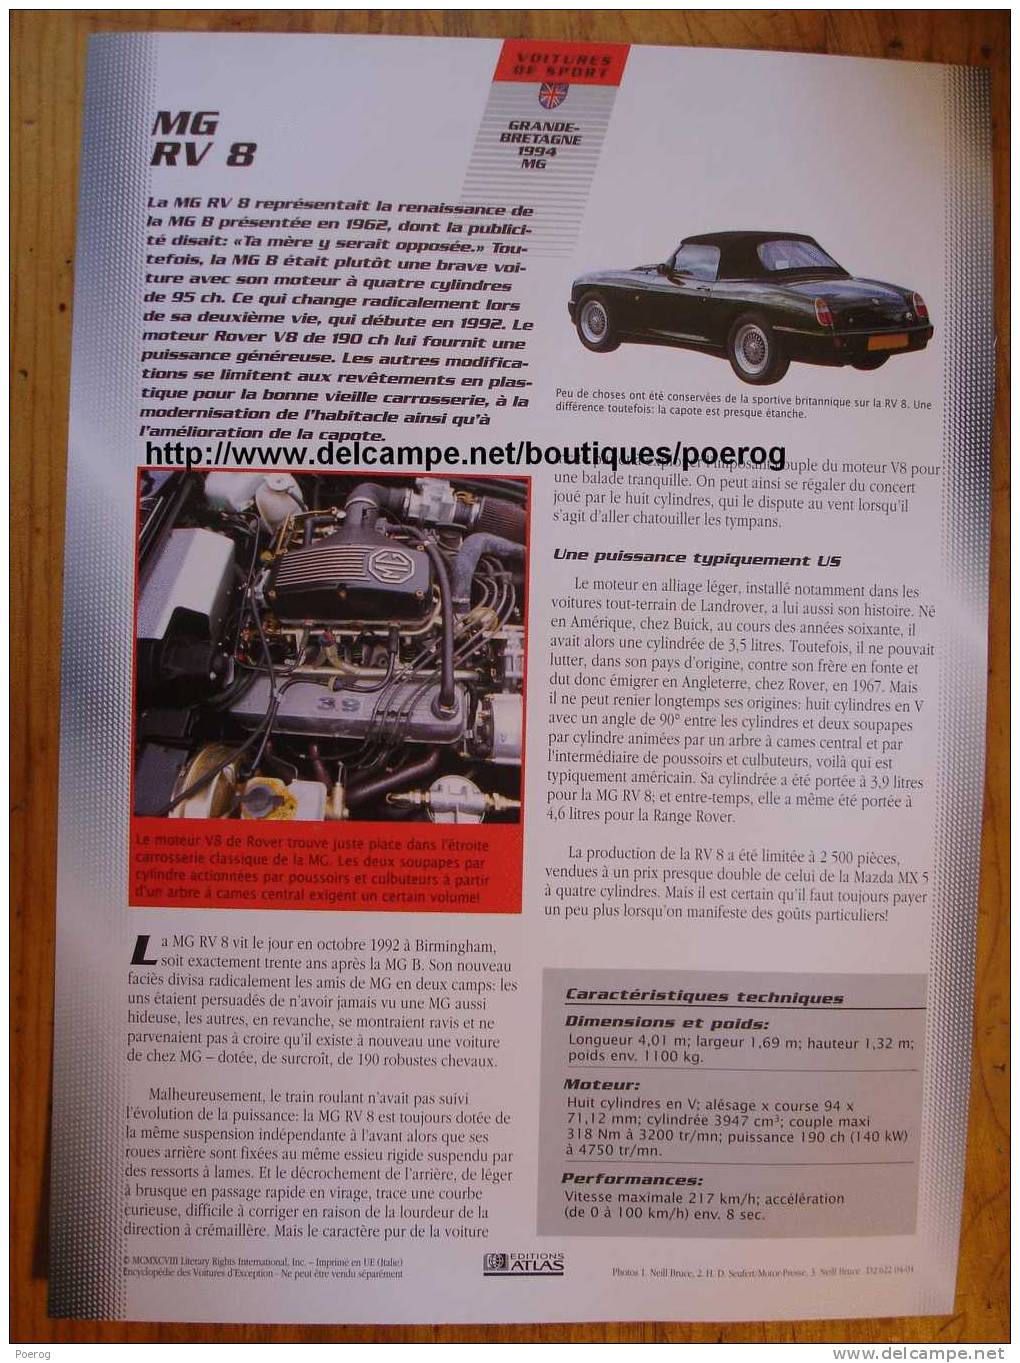 MG RV 8 - FICHE VOITURE GRAND FORMAT (A4) - 1998 - Auto Automobile Automobiles Voitures Car Cars - Voitures